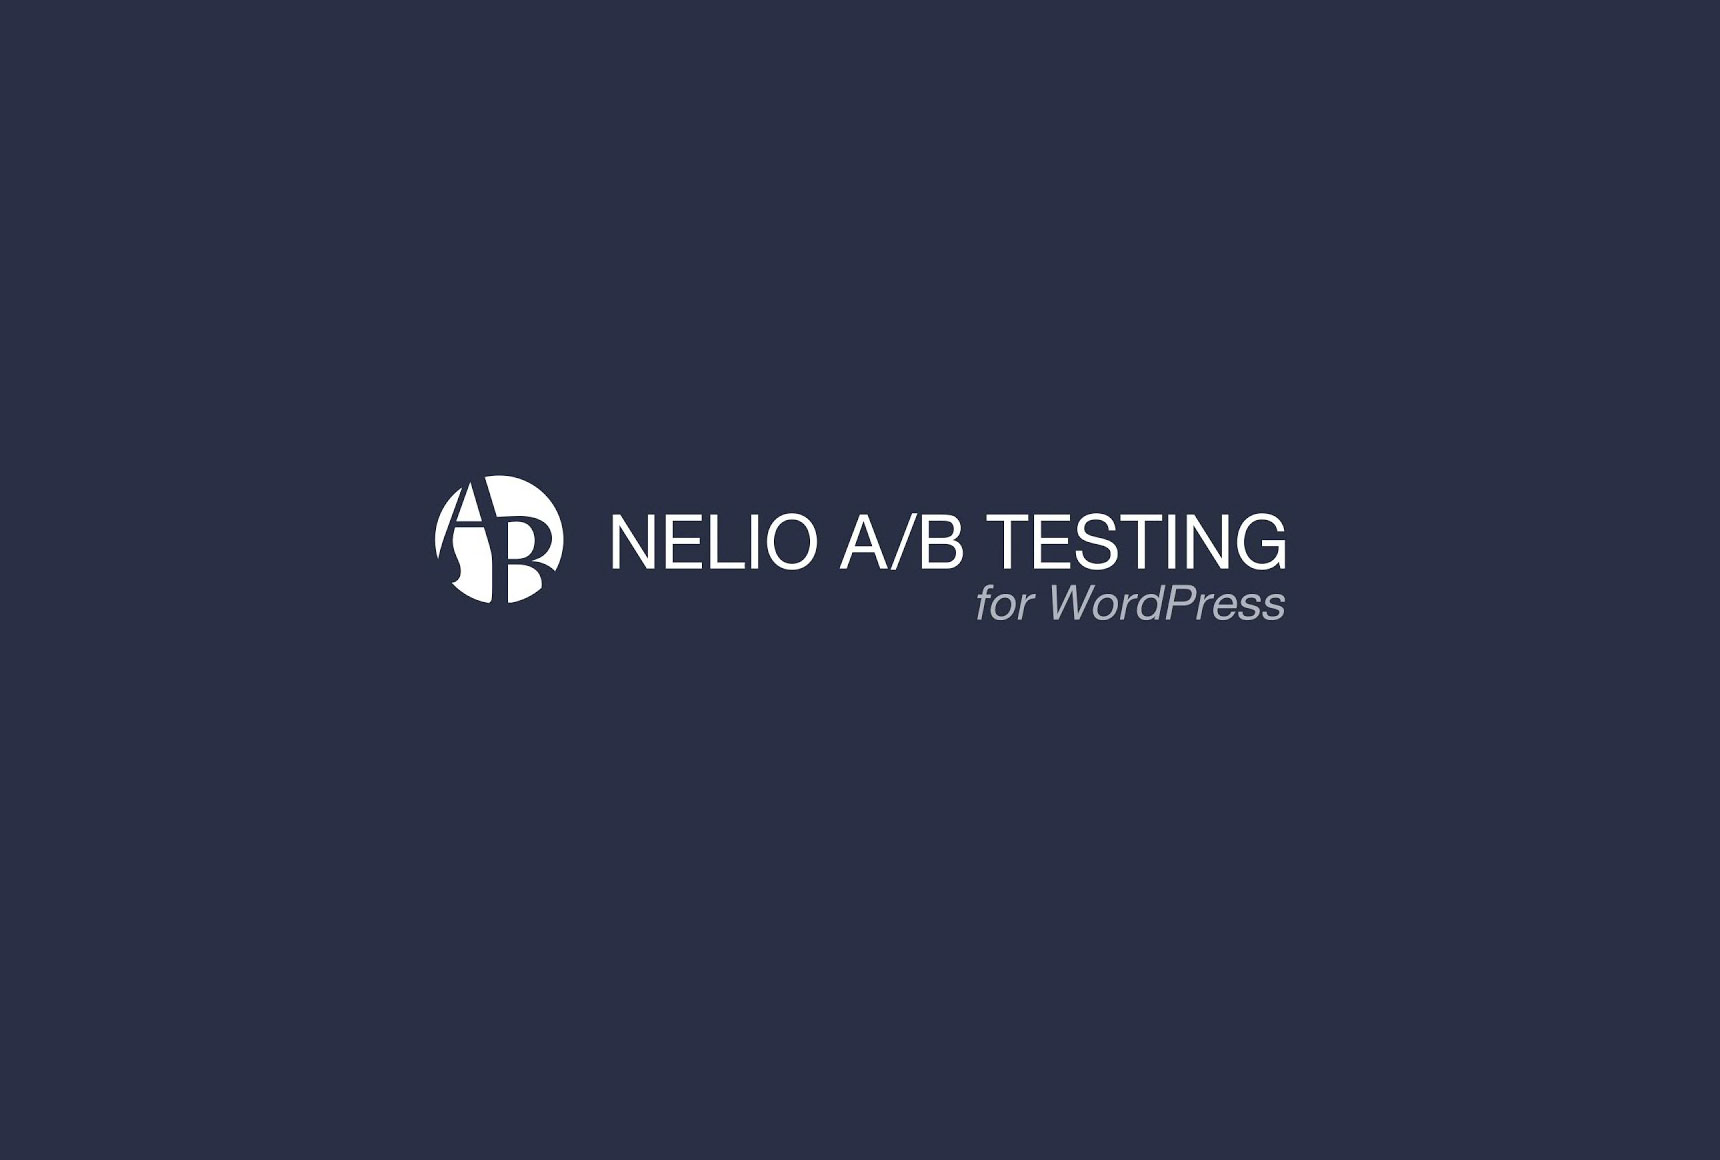 Nelio A/B Testing masthead image